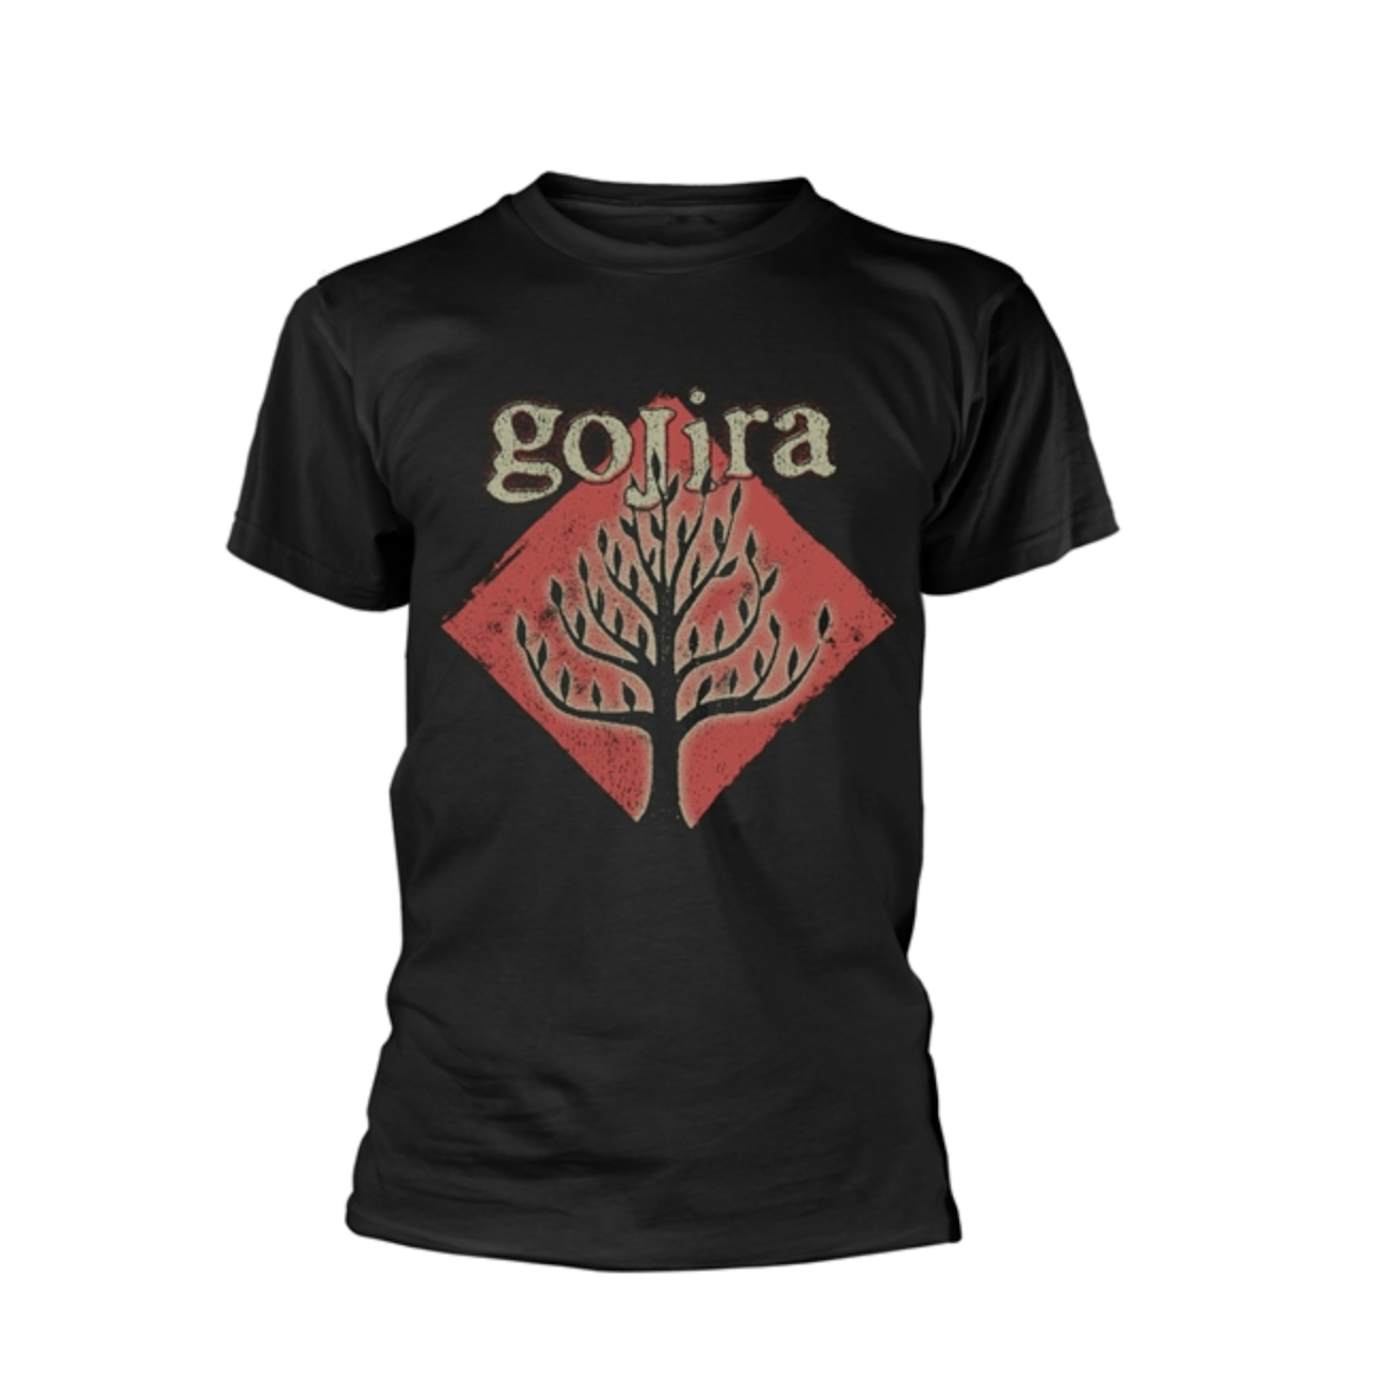 Gojira "The Single Tree" T-Shirt